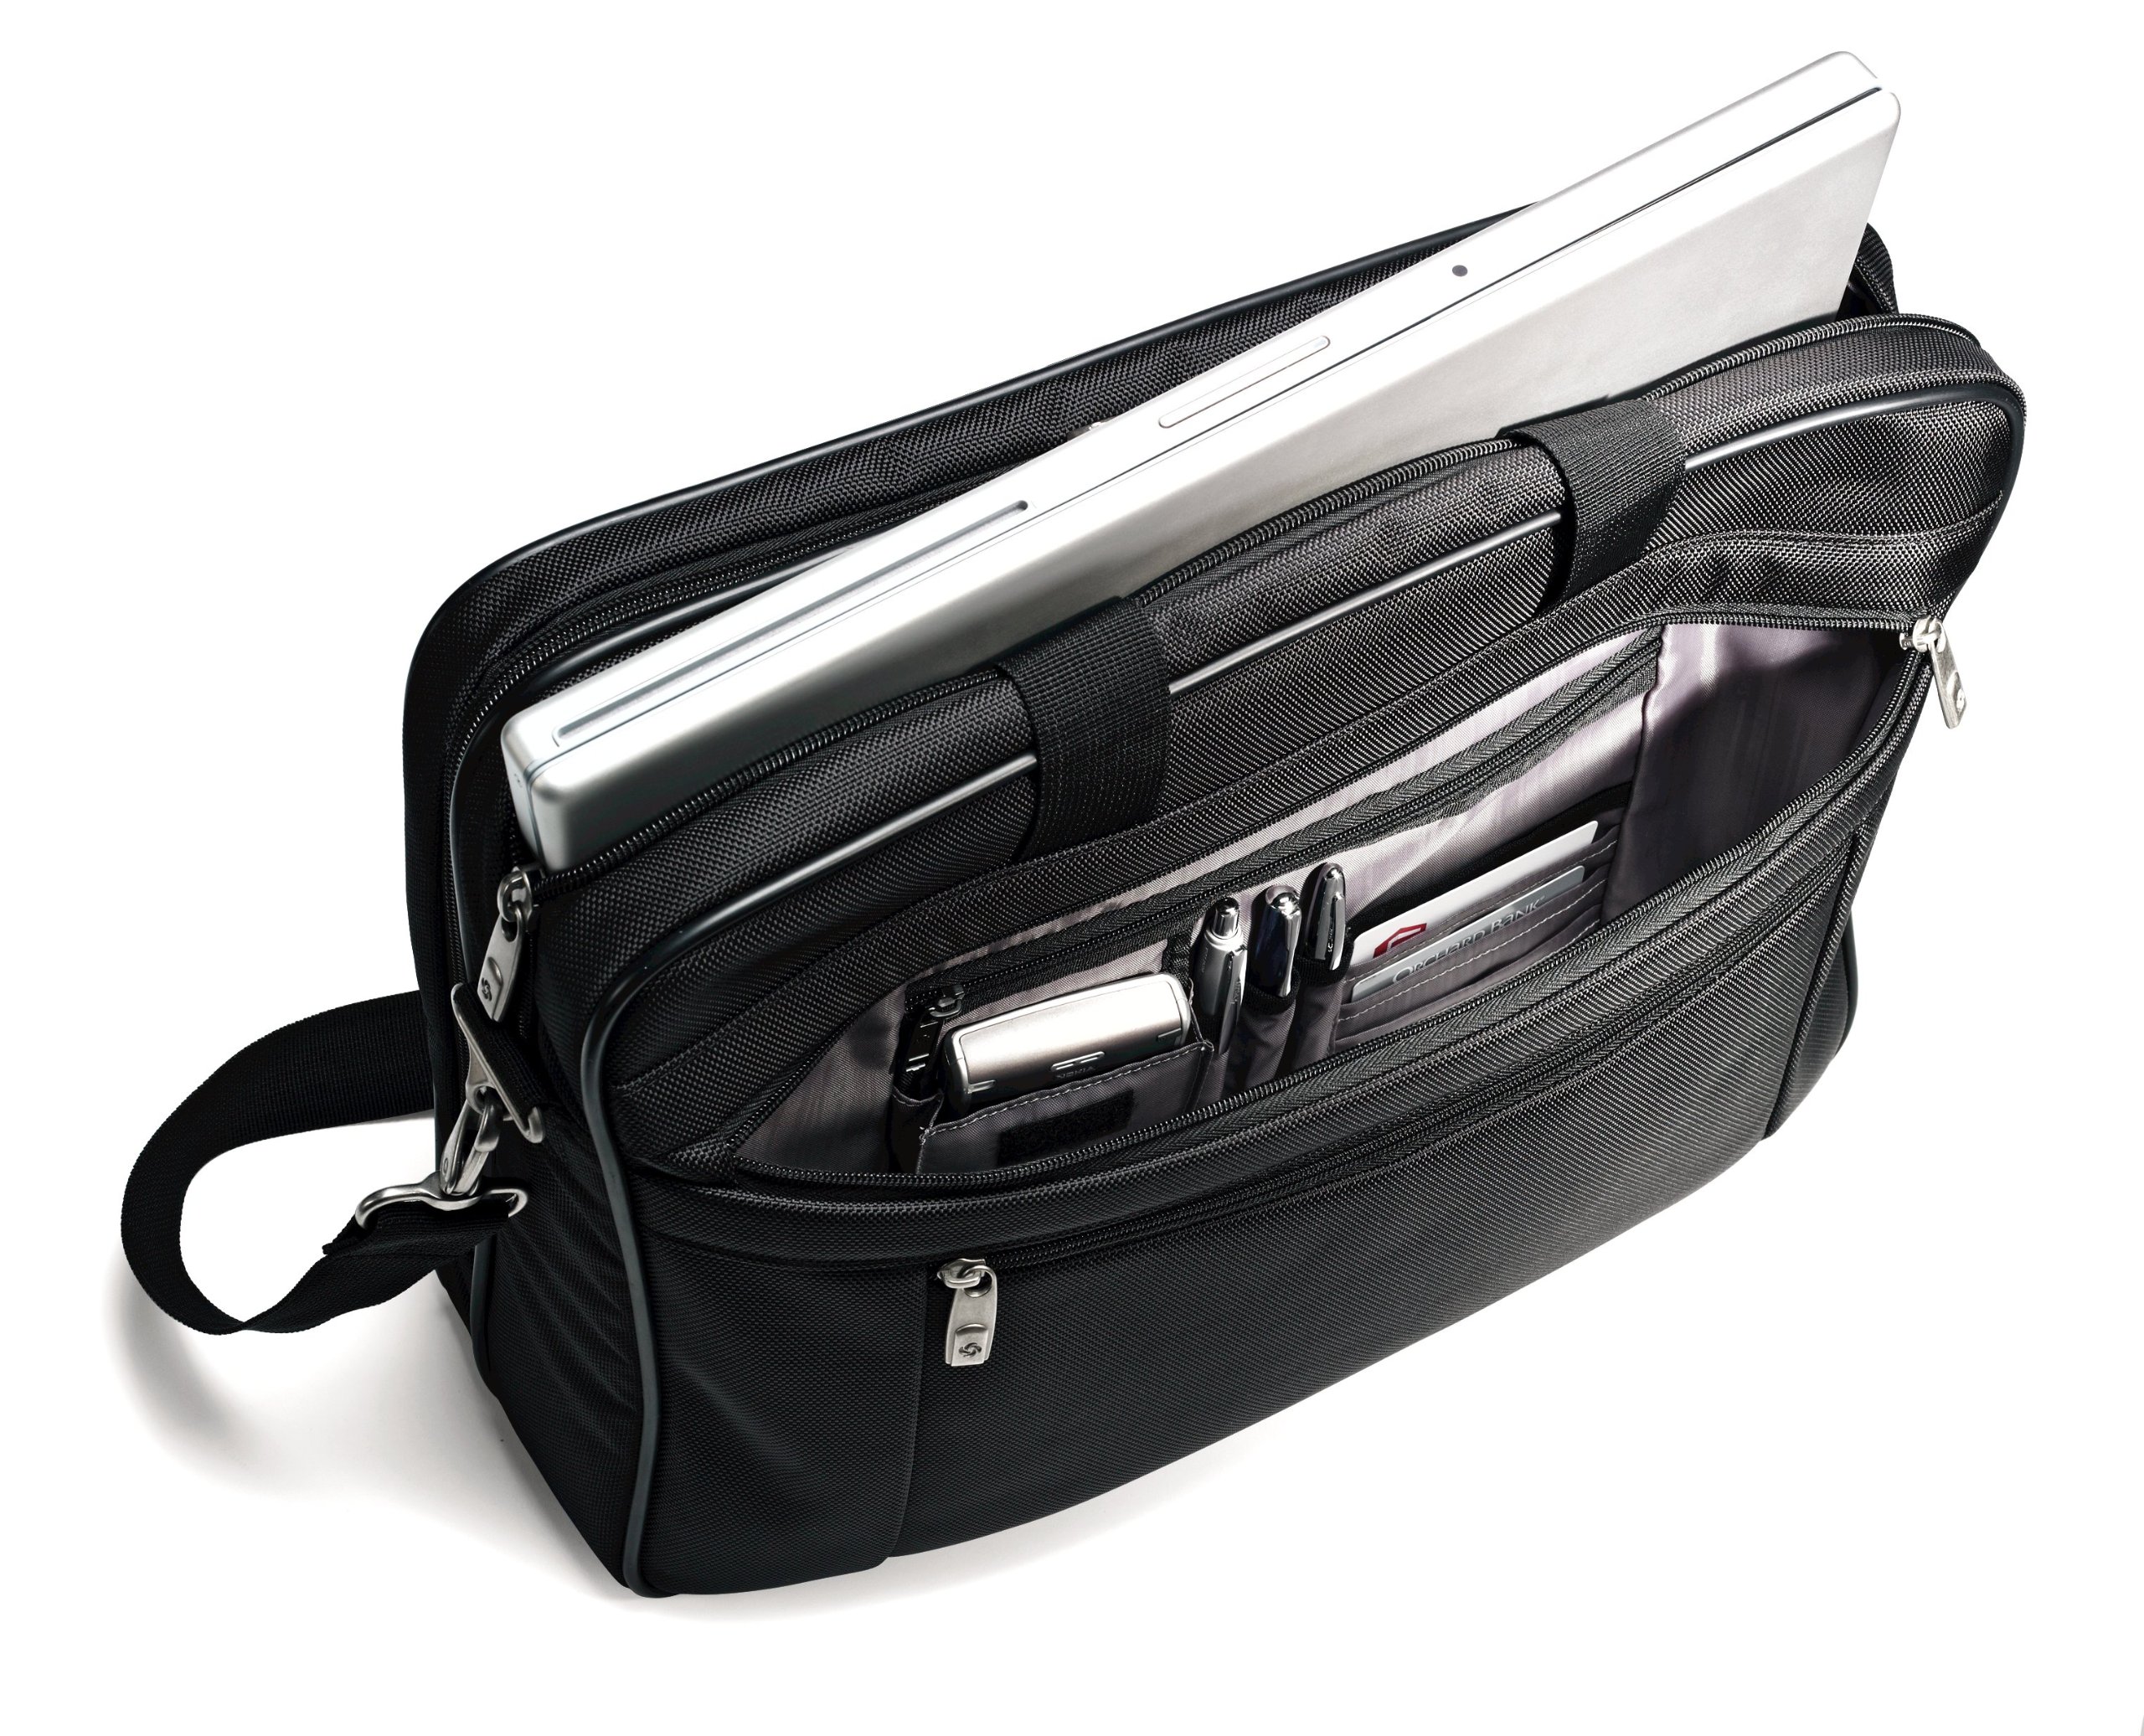 Samsonite Classic Multi Toploader Briefcase, Black, Double Gusset 17-Inch